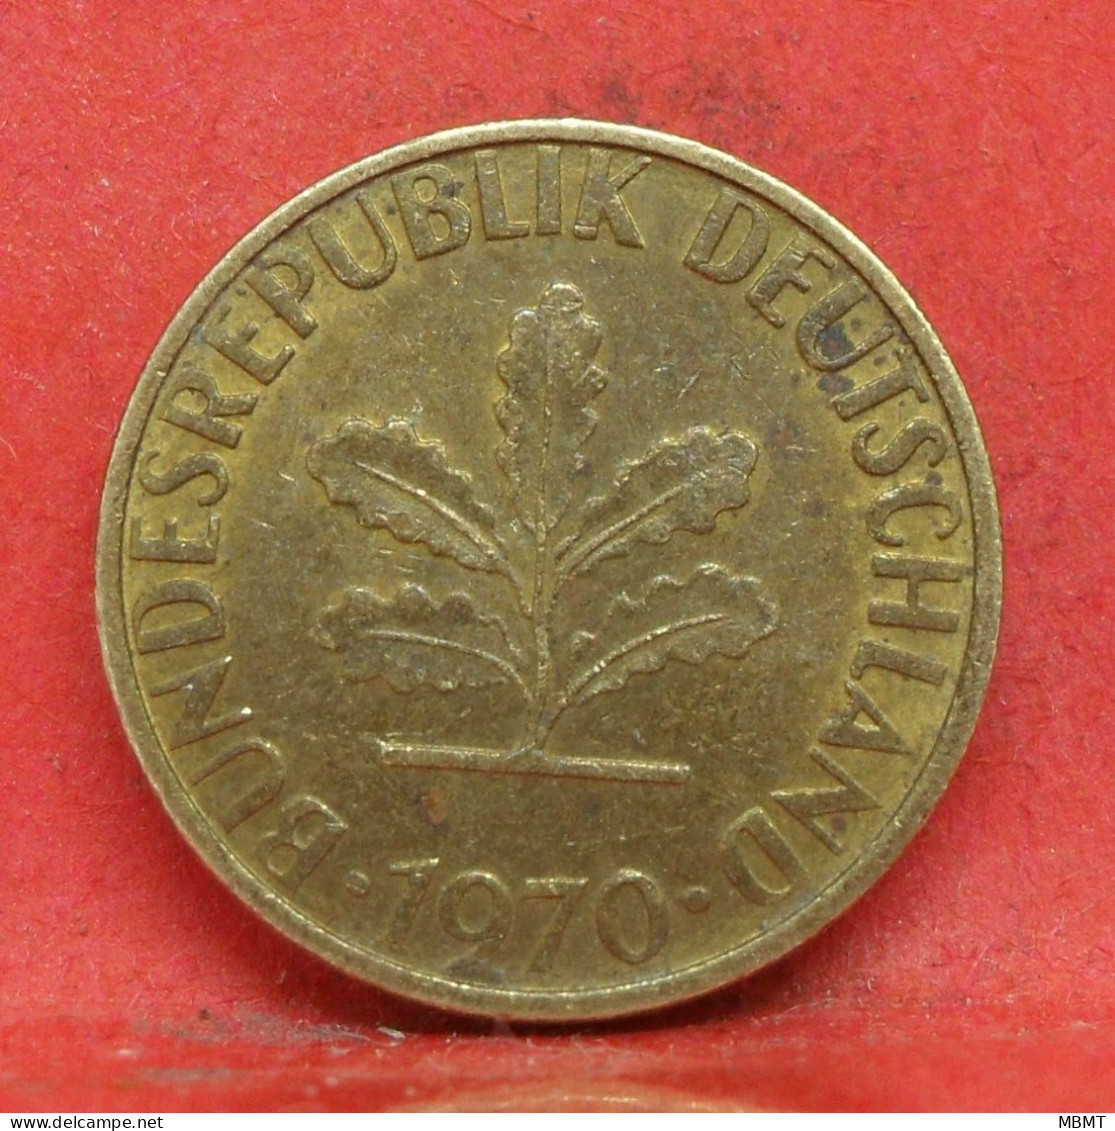 5 Pfennig 1970 F - TTB - Pièce Monnaie Allemagne - Article N°1457 - 5 Pfennig